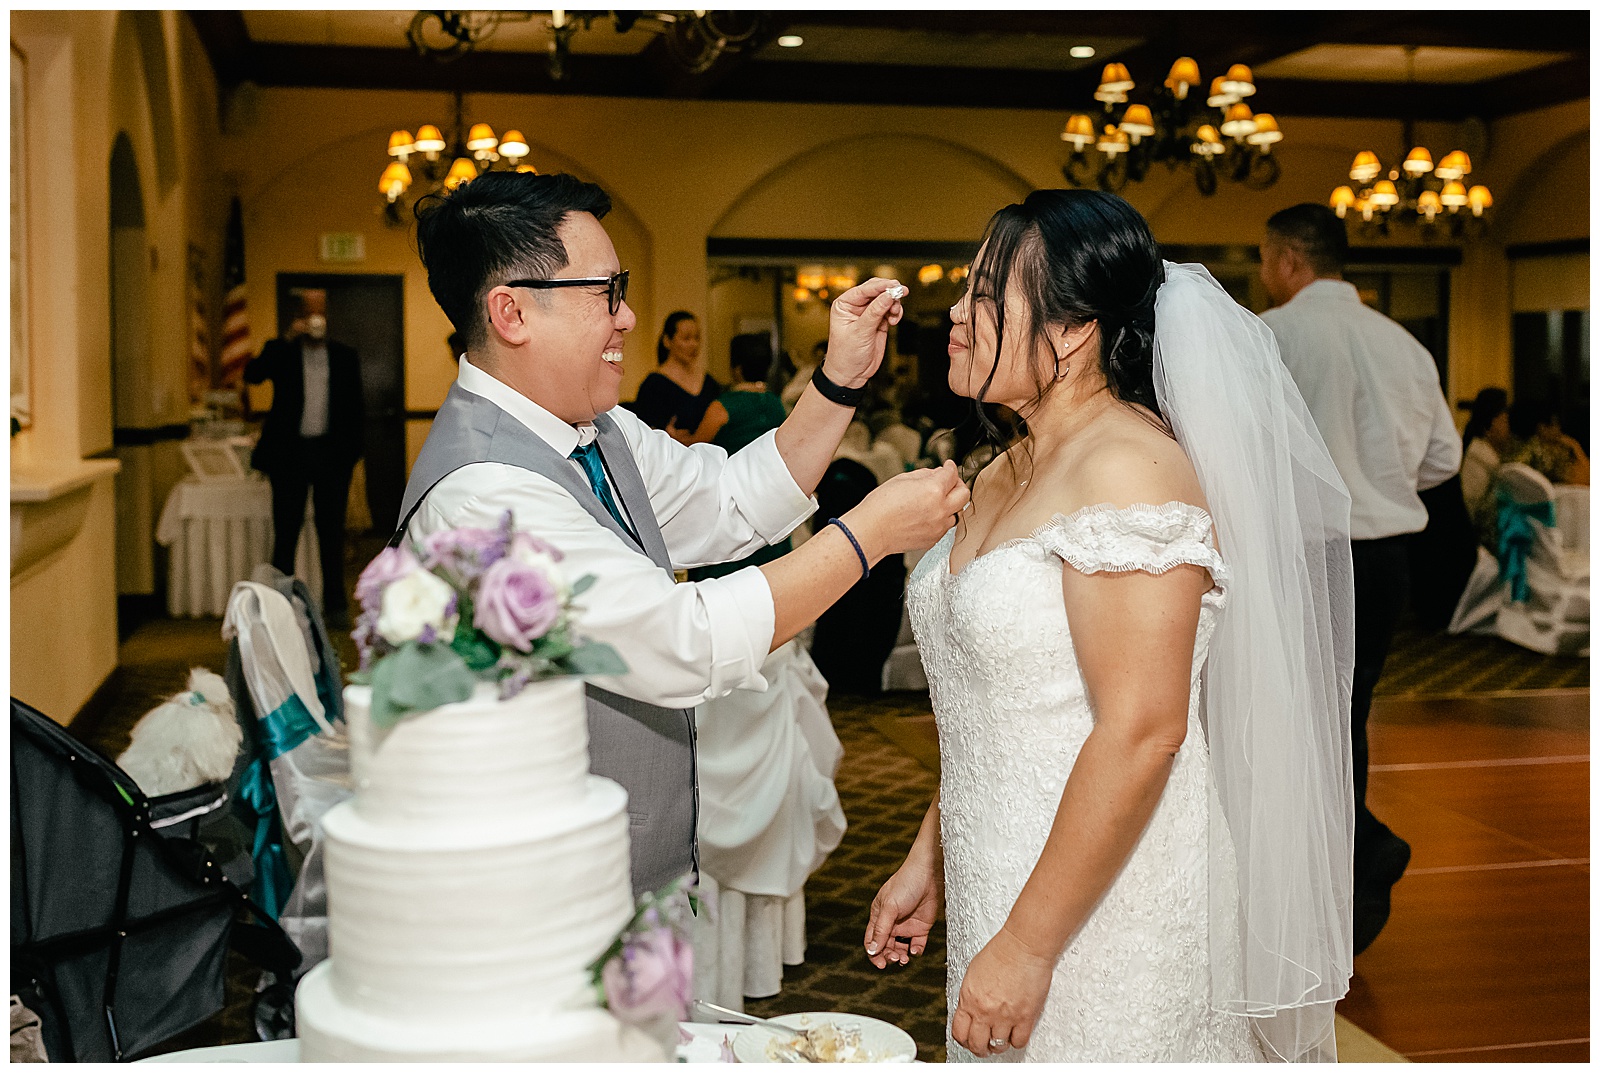 San-diego-wedding-photographer-photography-admiral-baker-kidd-mission-valley-bride-groom-bride-groom-love-sd-weddings-rancho-penasquitos-rancho-bernardo-poway-photographers-weddings-ceremony-reception-lavender-